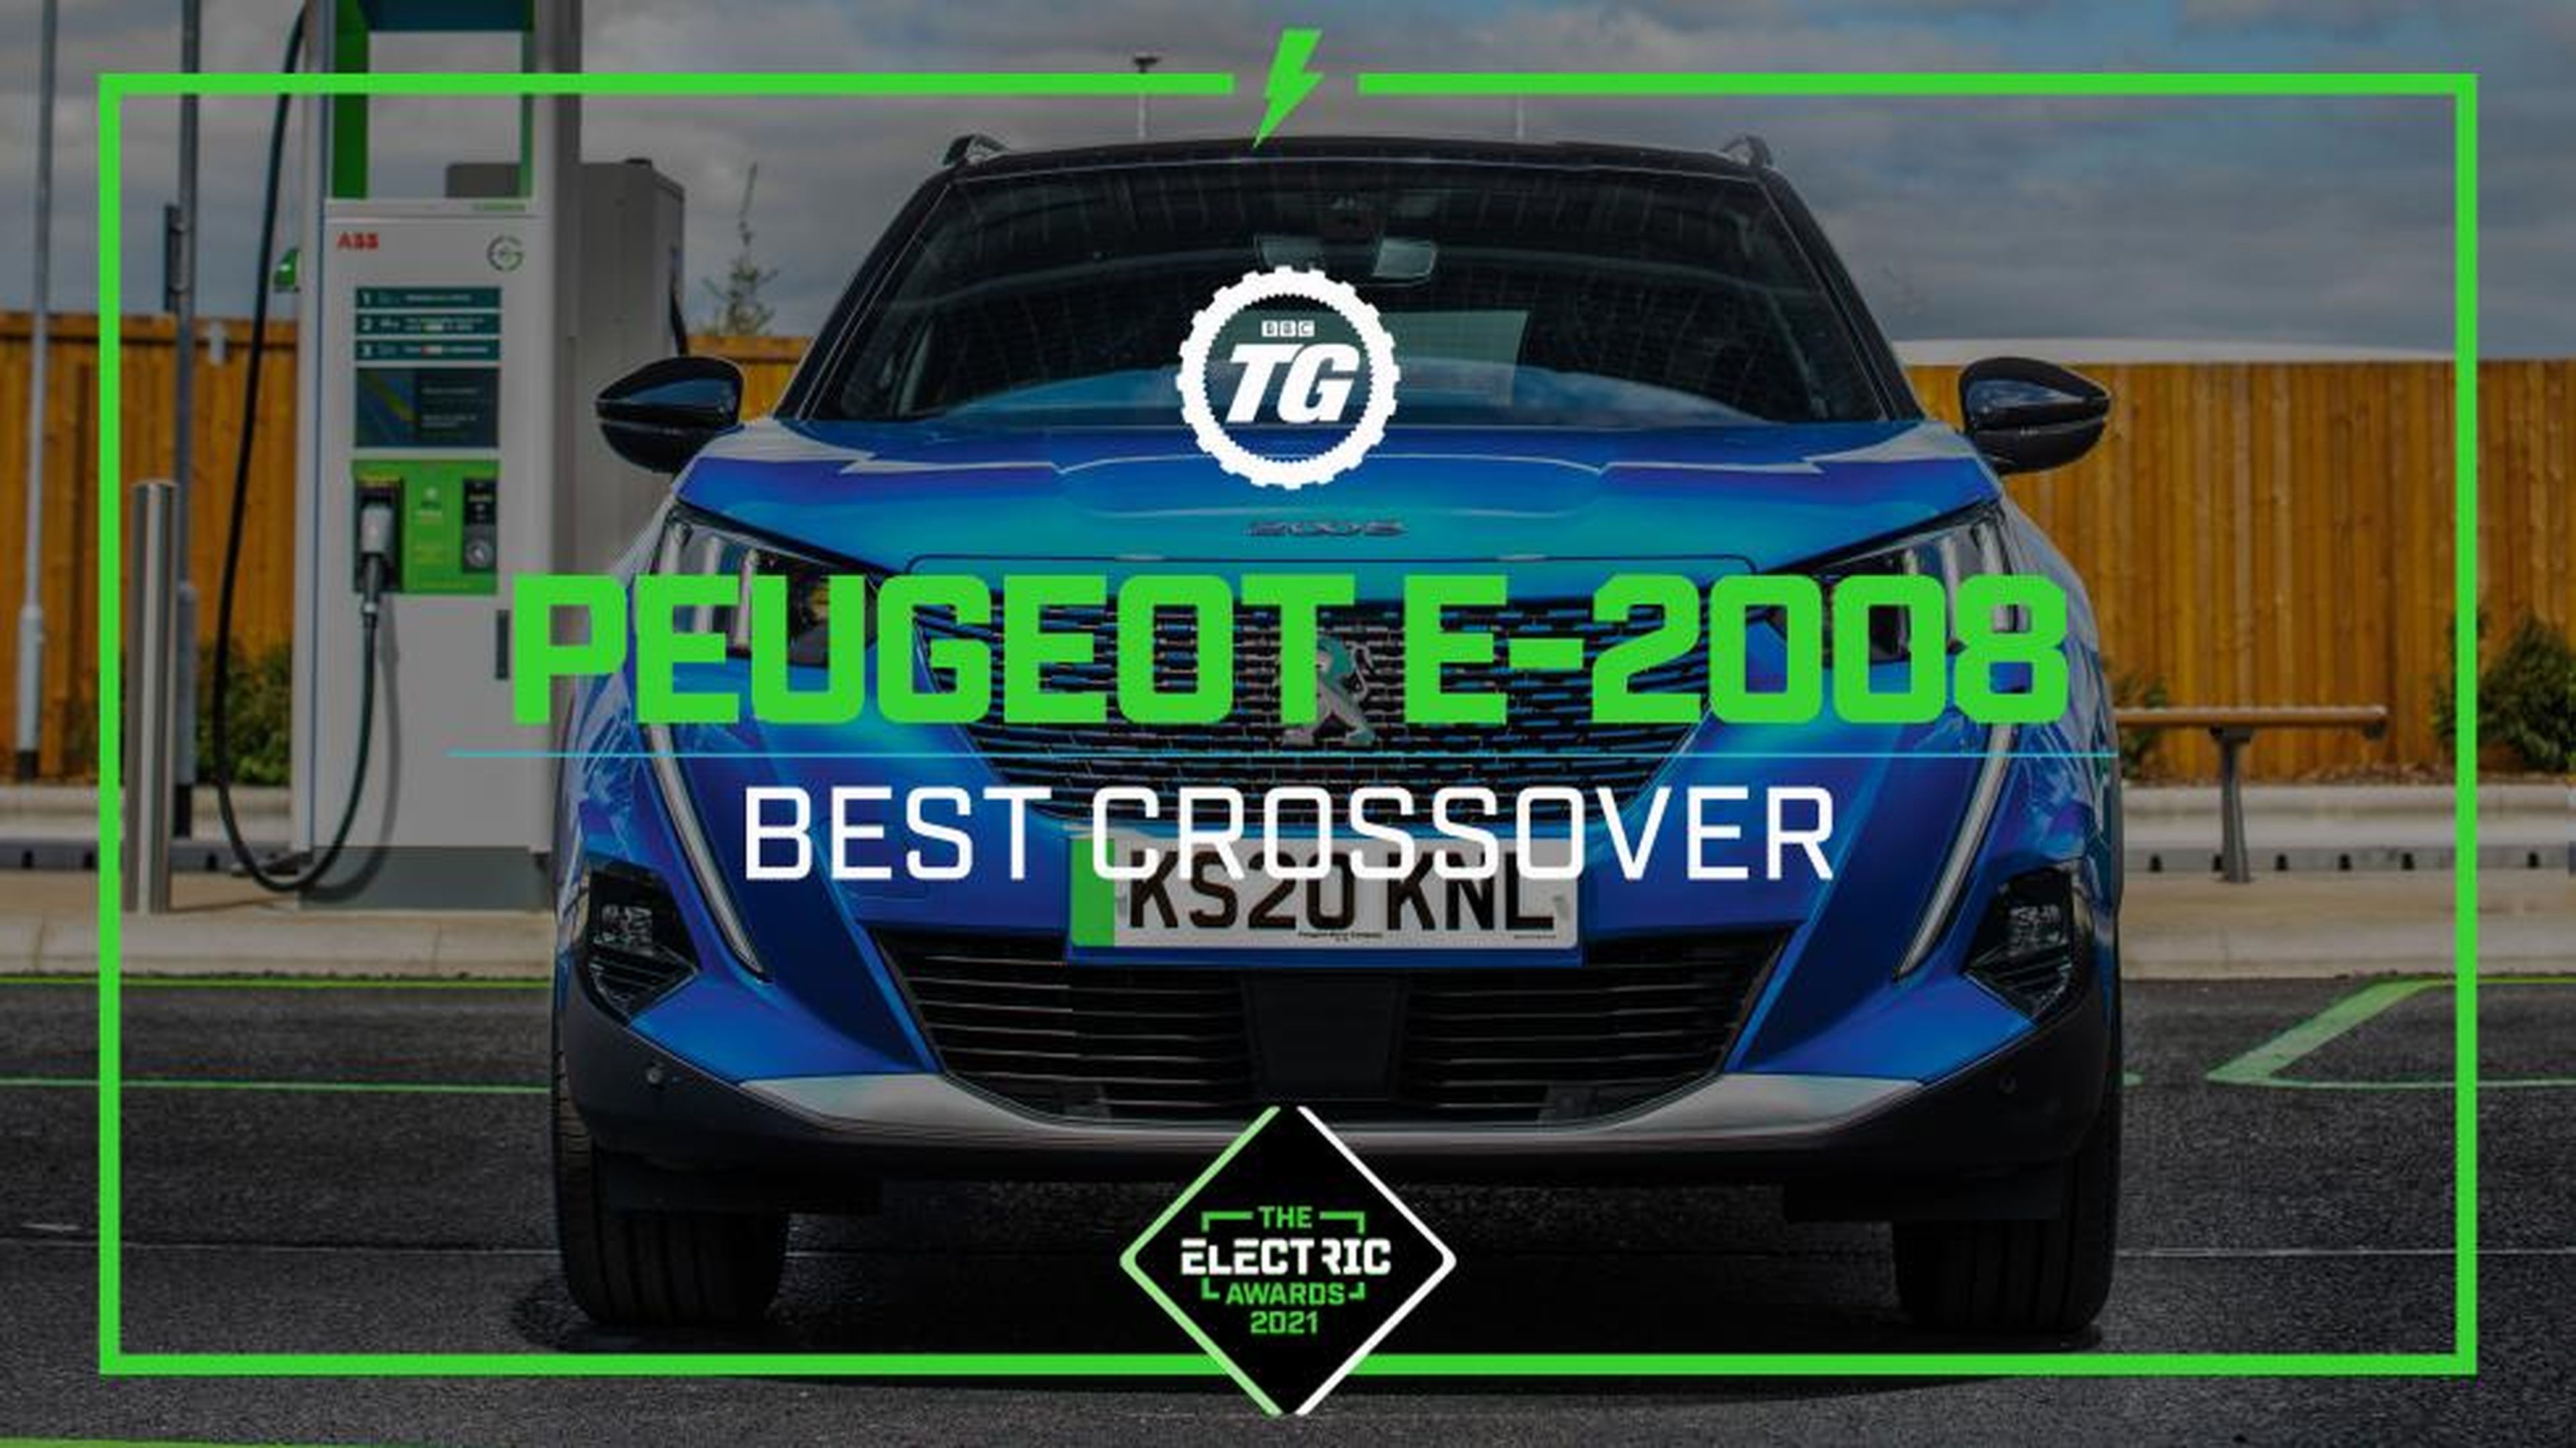 Top Gear Electric Awards: Peugeot e-2008